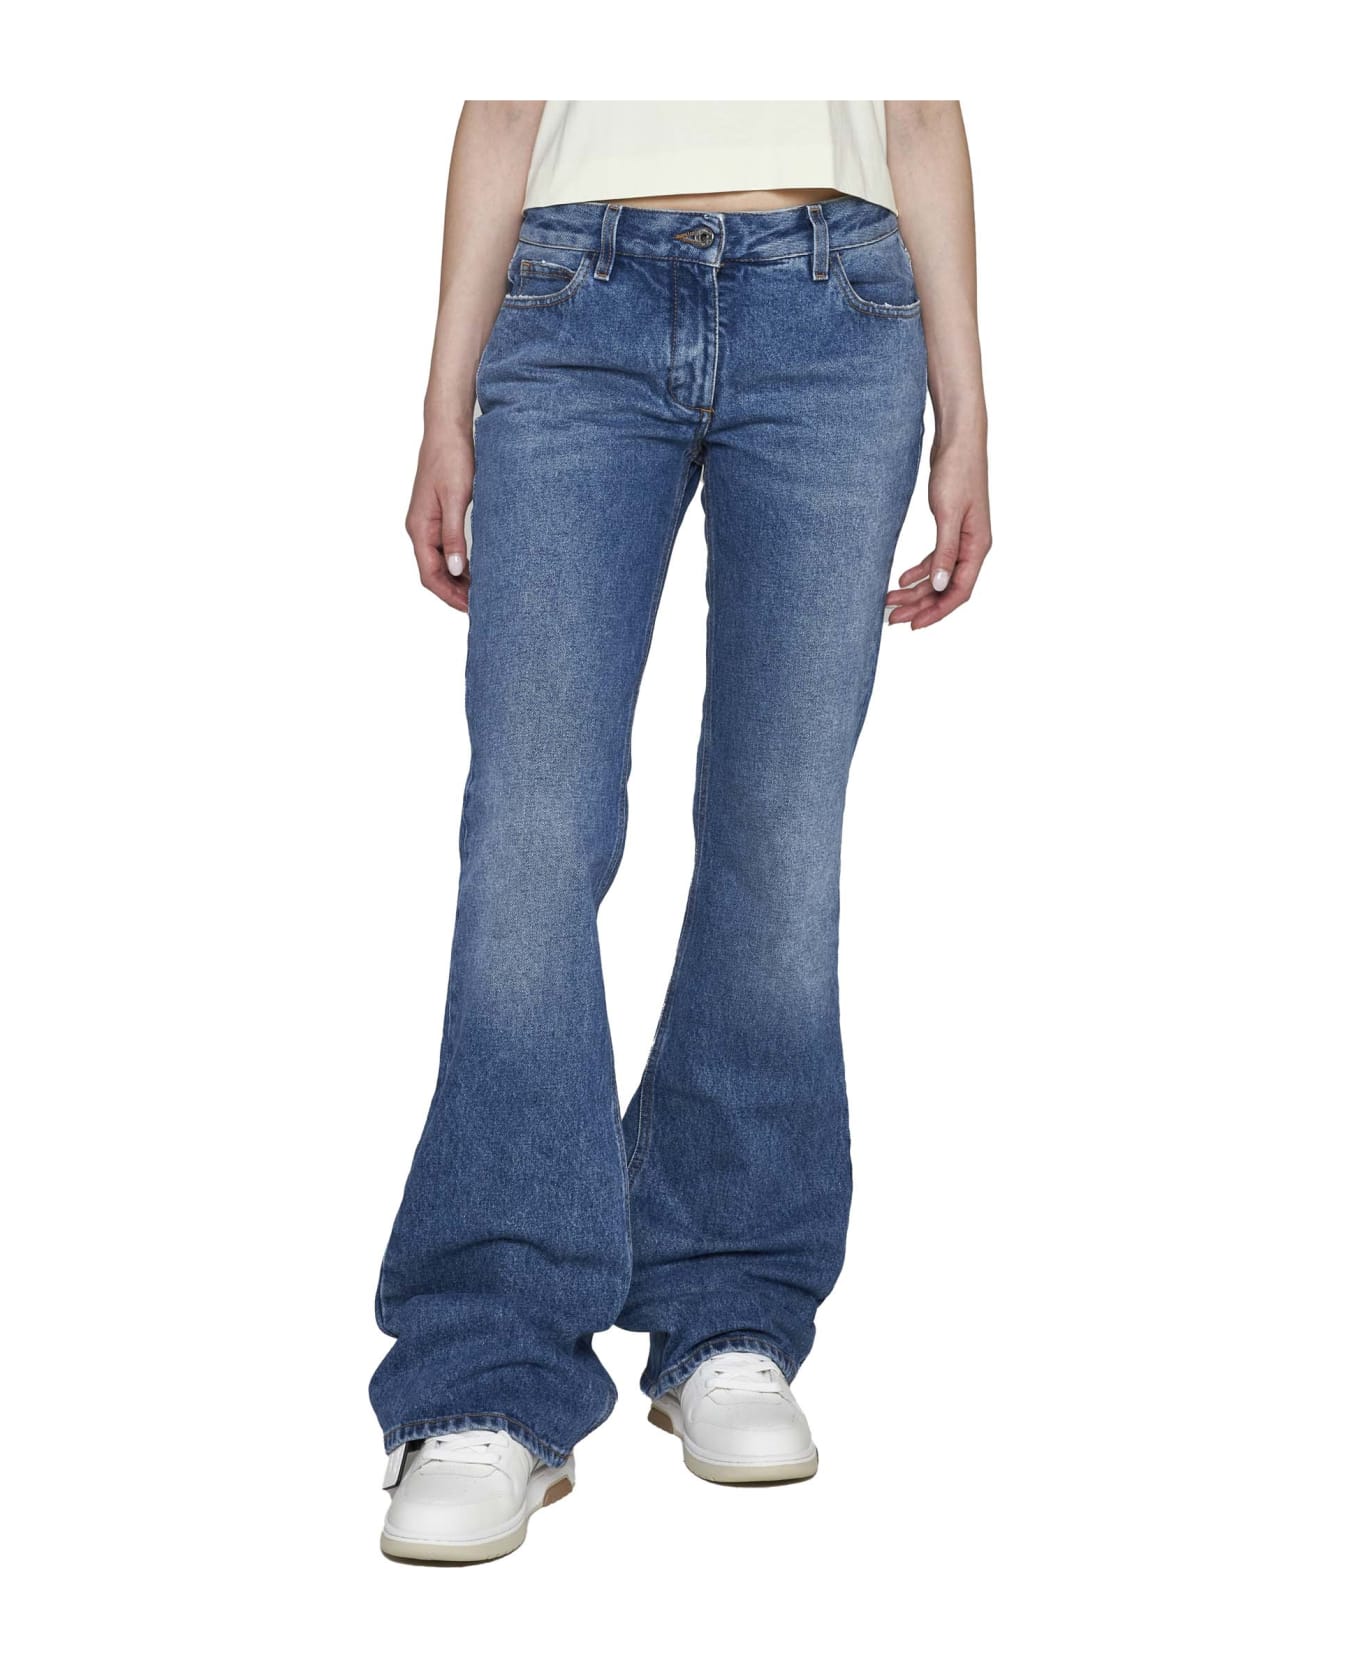 Off-White Flared Jeans - Denim